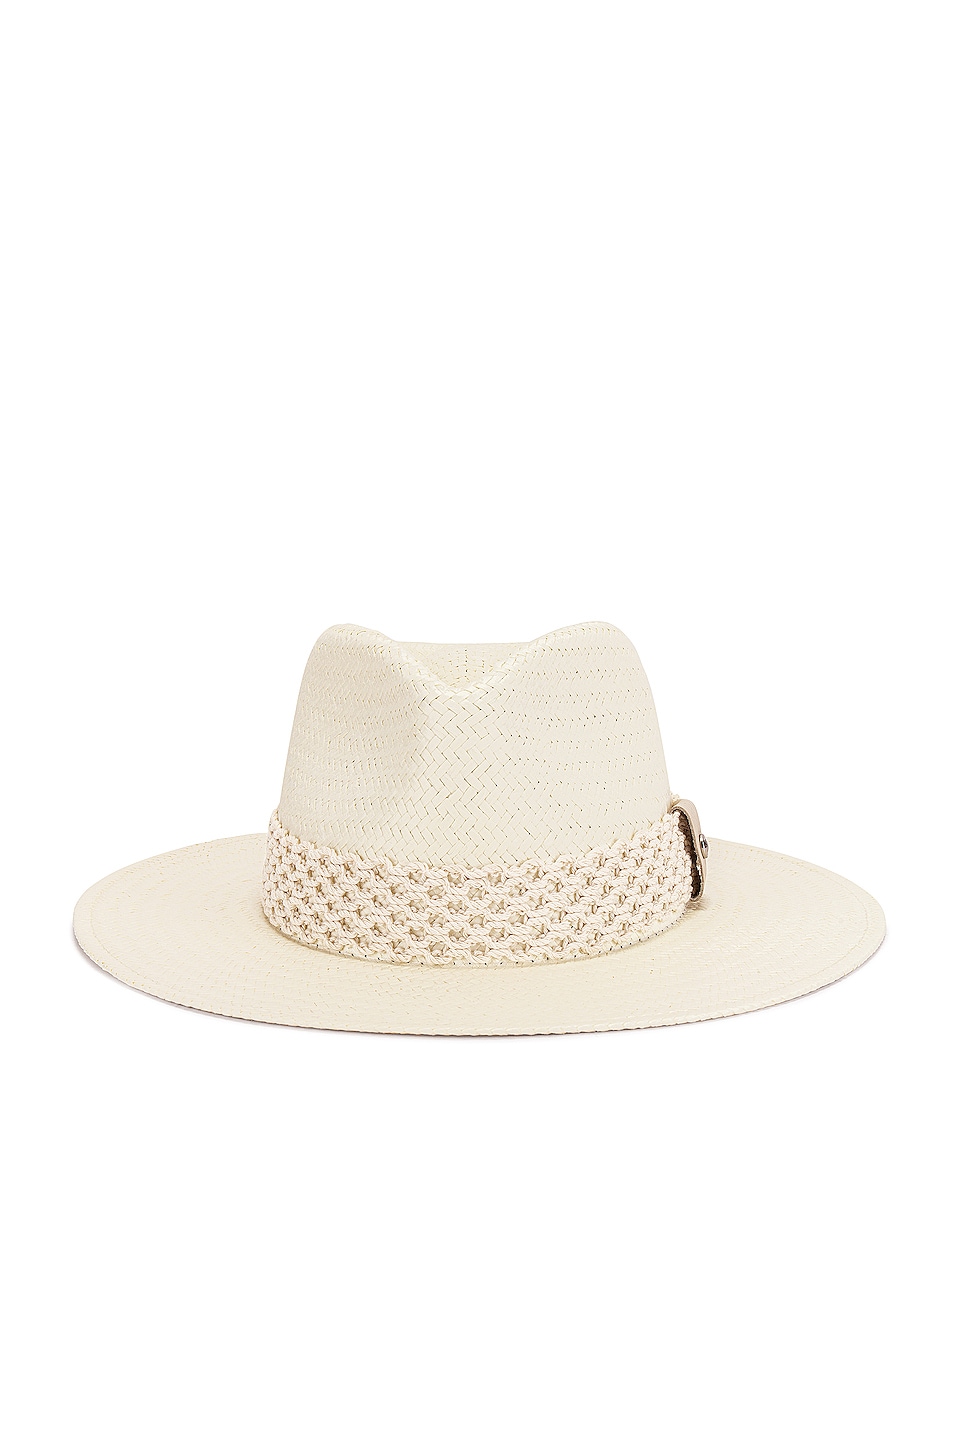 Rag & Bone Packable Straw Fedora Hat in Natural | REVOLVE